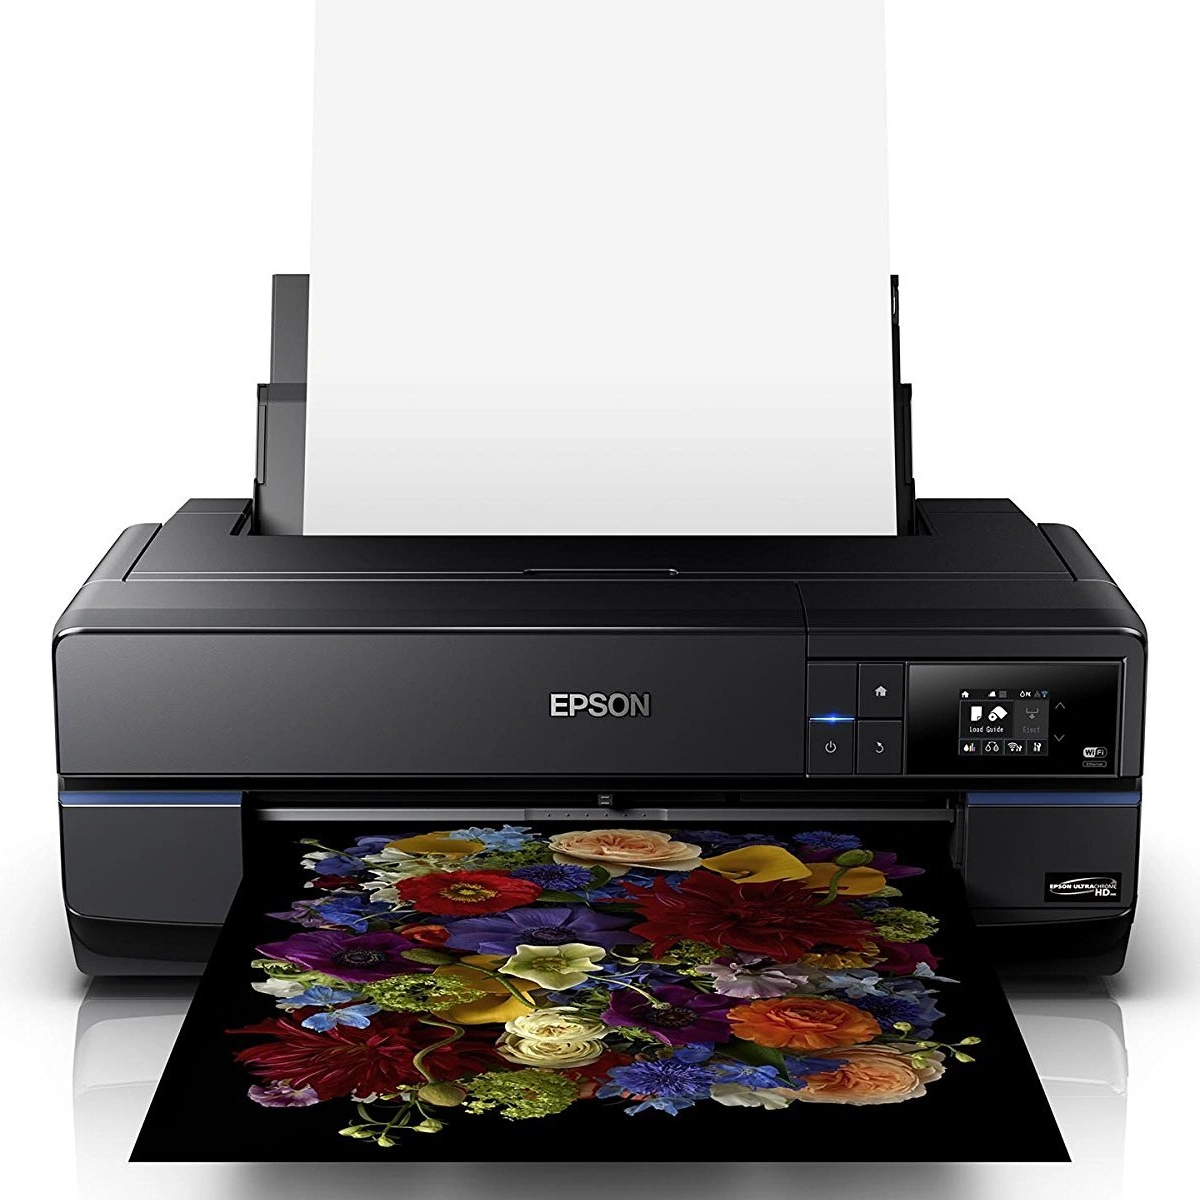 Epson P800 Printer Printing Large Floral Image